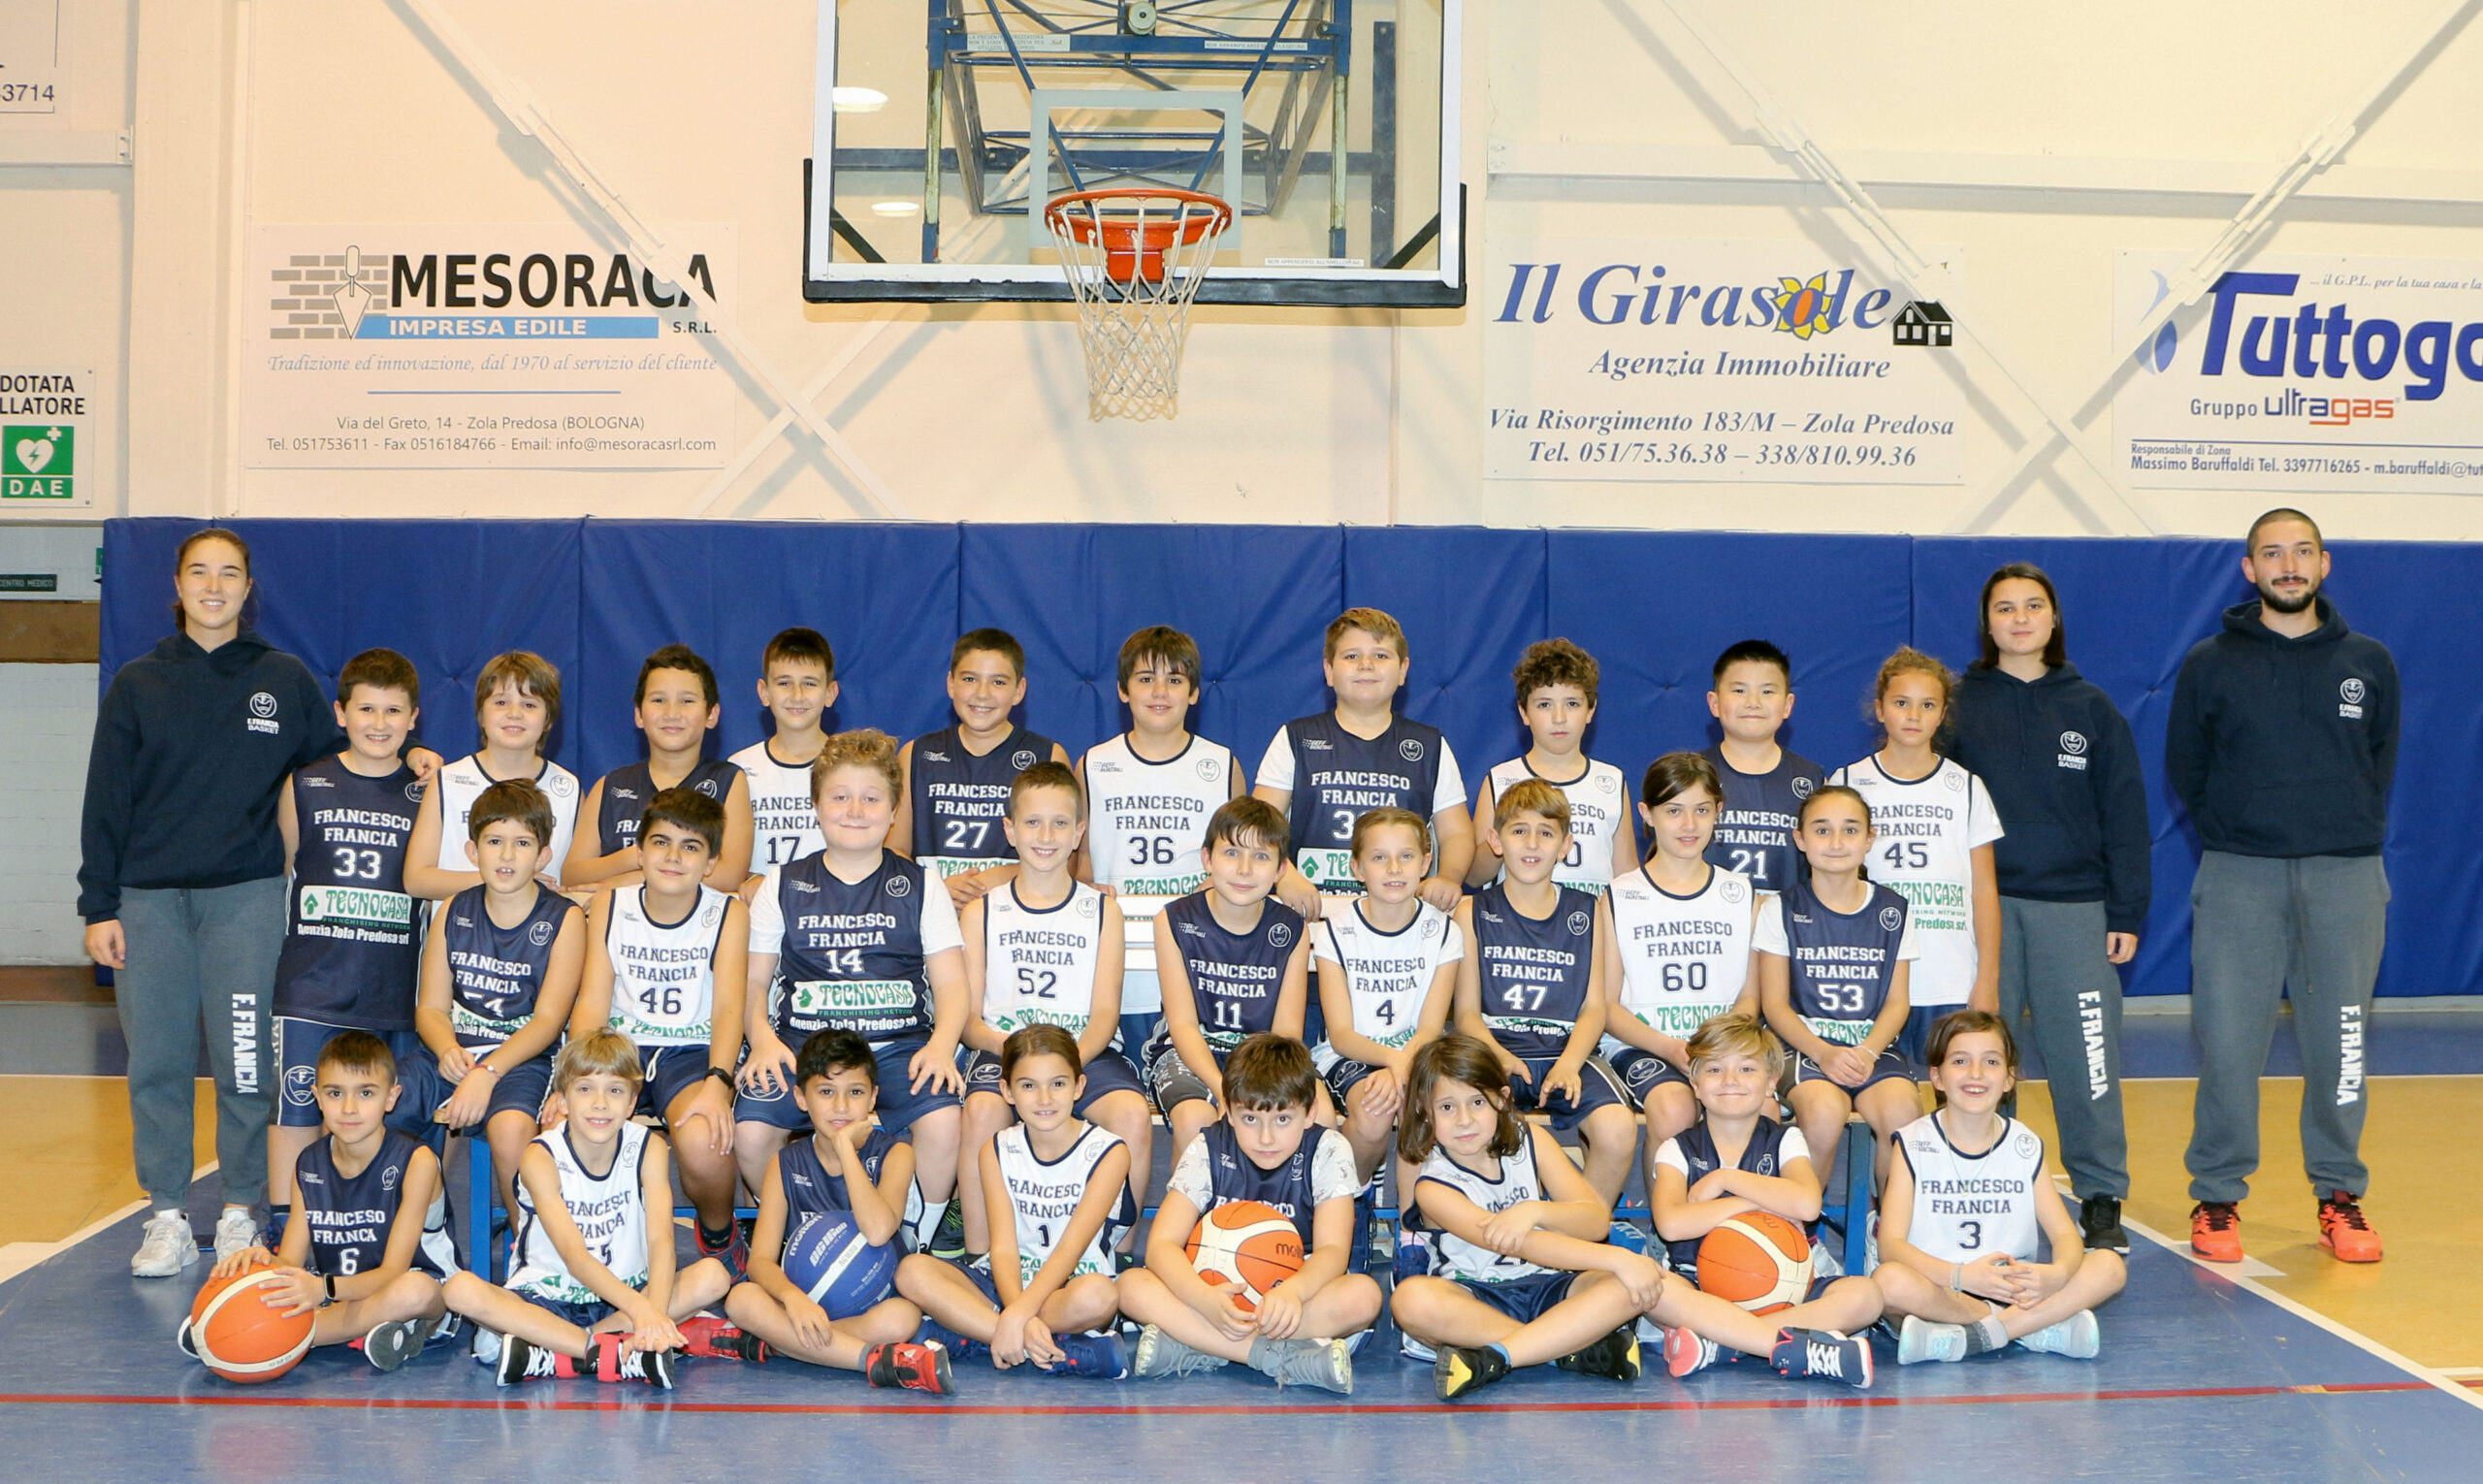 Squadra Aquilotti 2012 - Francesco Francia Basket